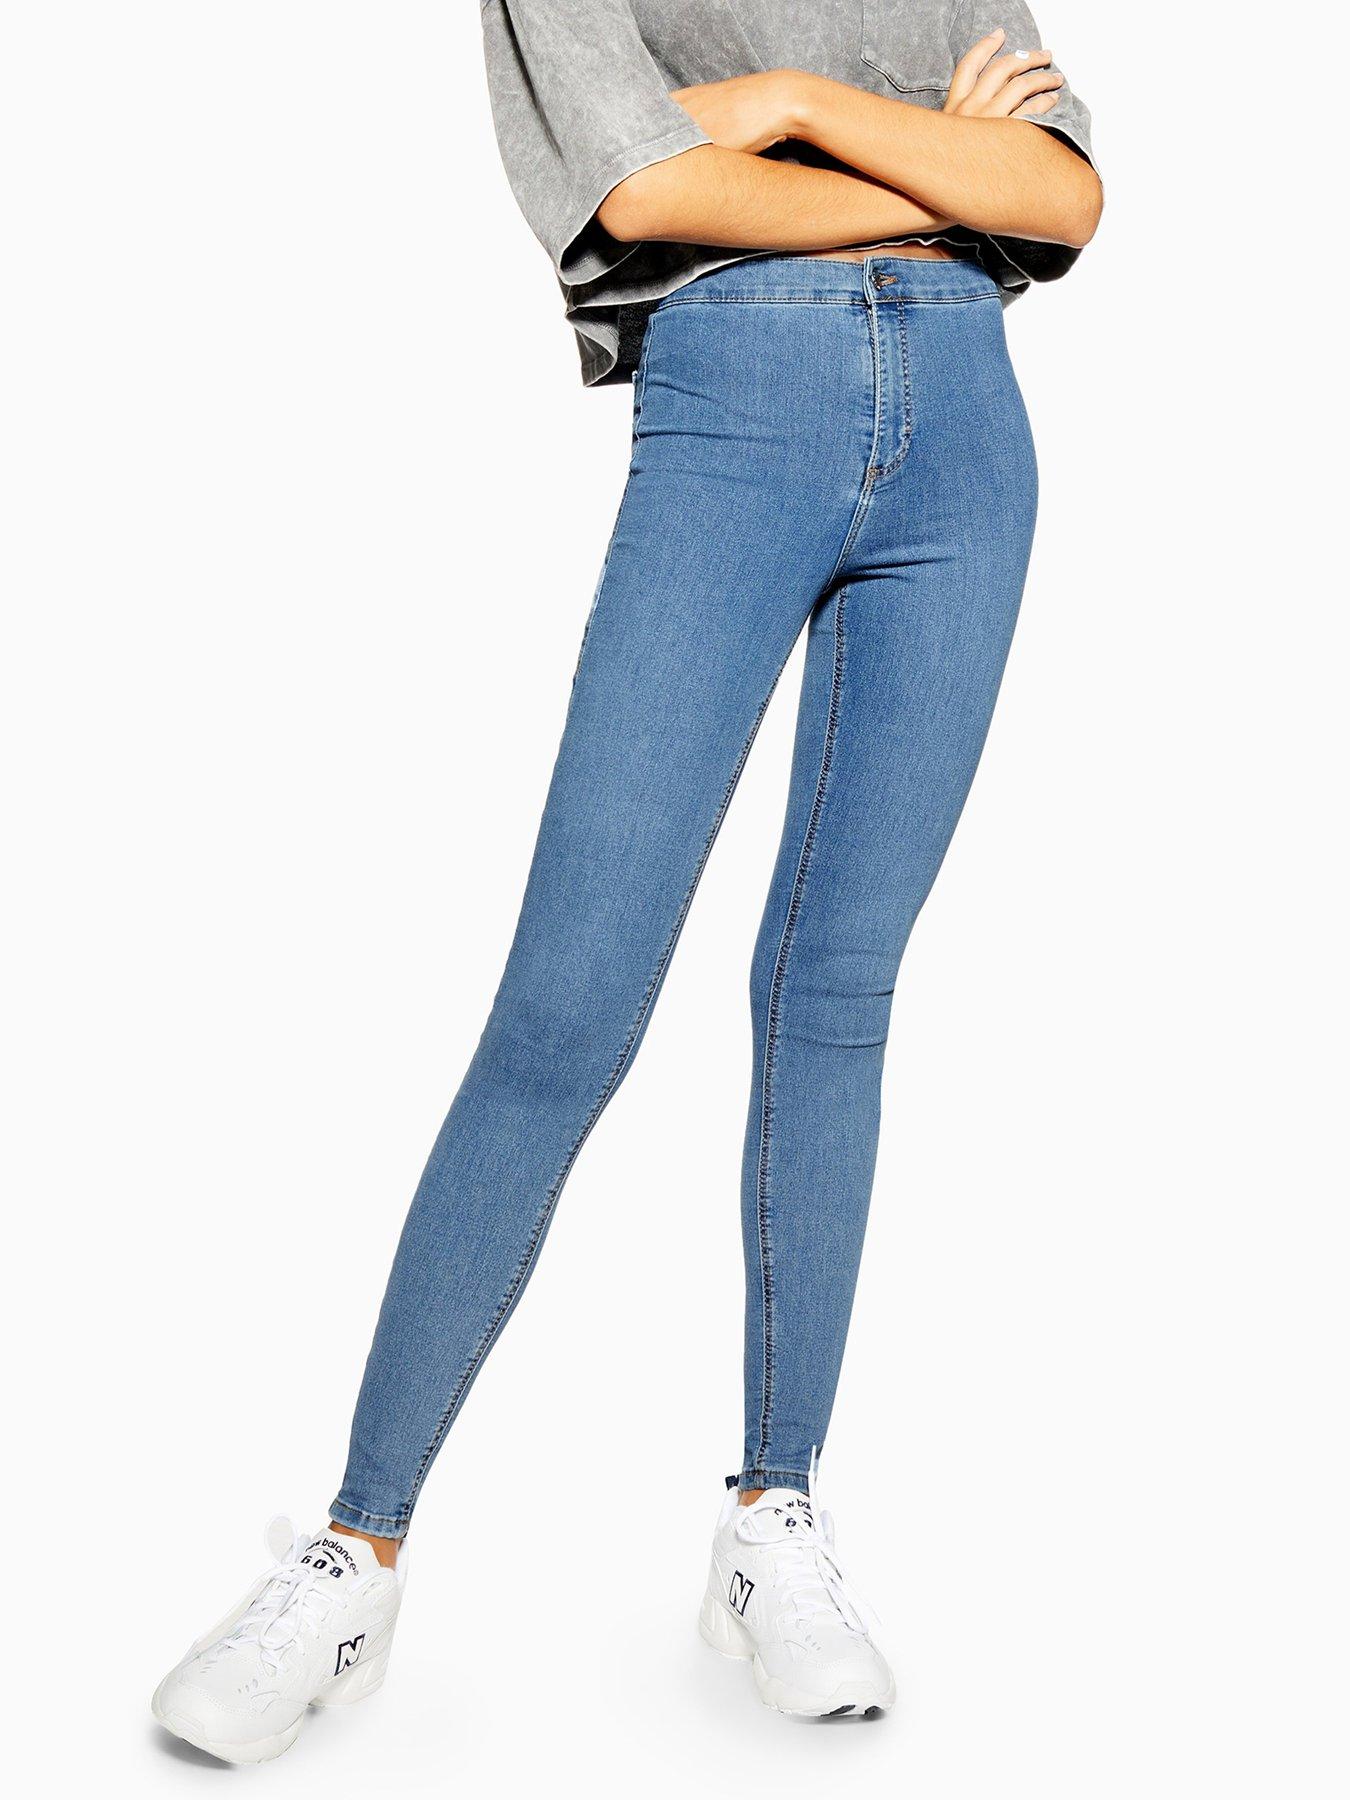 topshop blue joni jeans